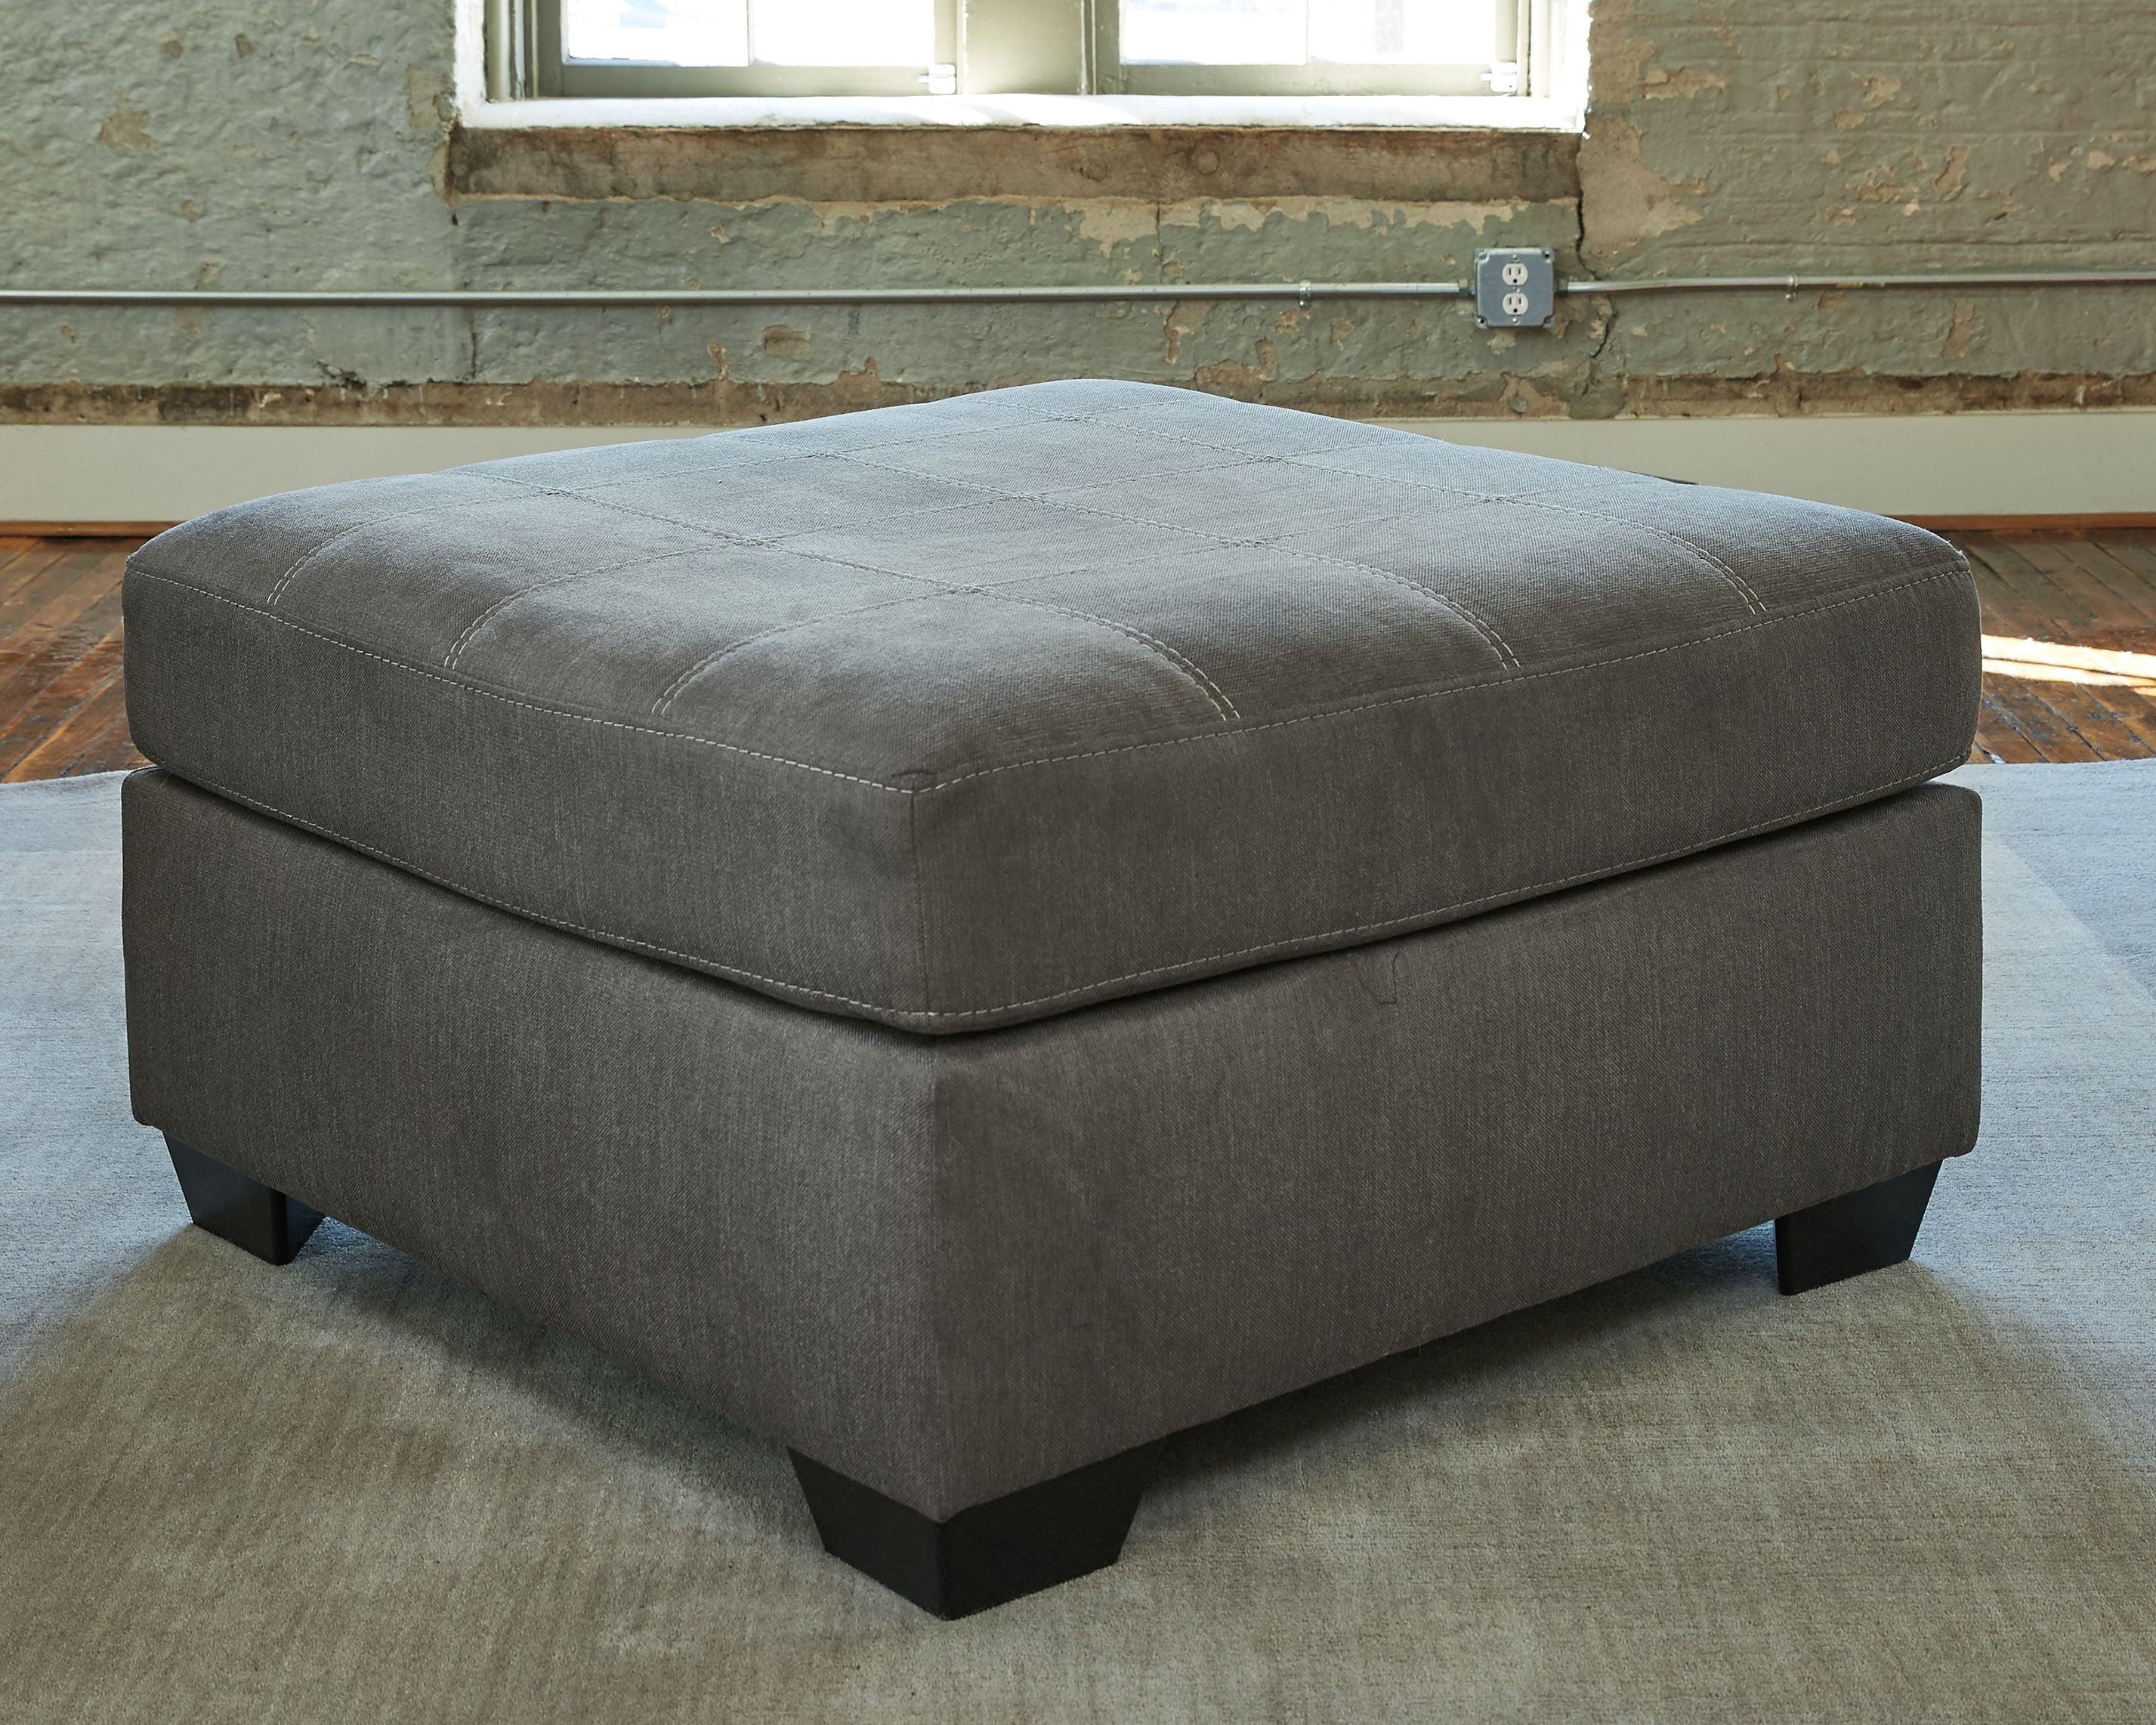 Ashley Furniture - Pitkin - Slate - Oversized Accent Ottoman - 5th Avenue Furniture